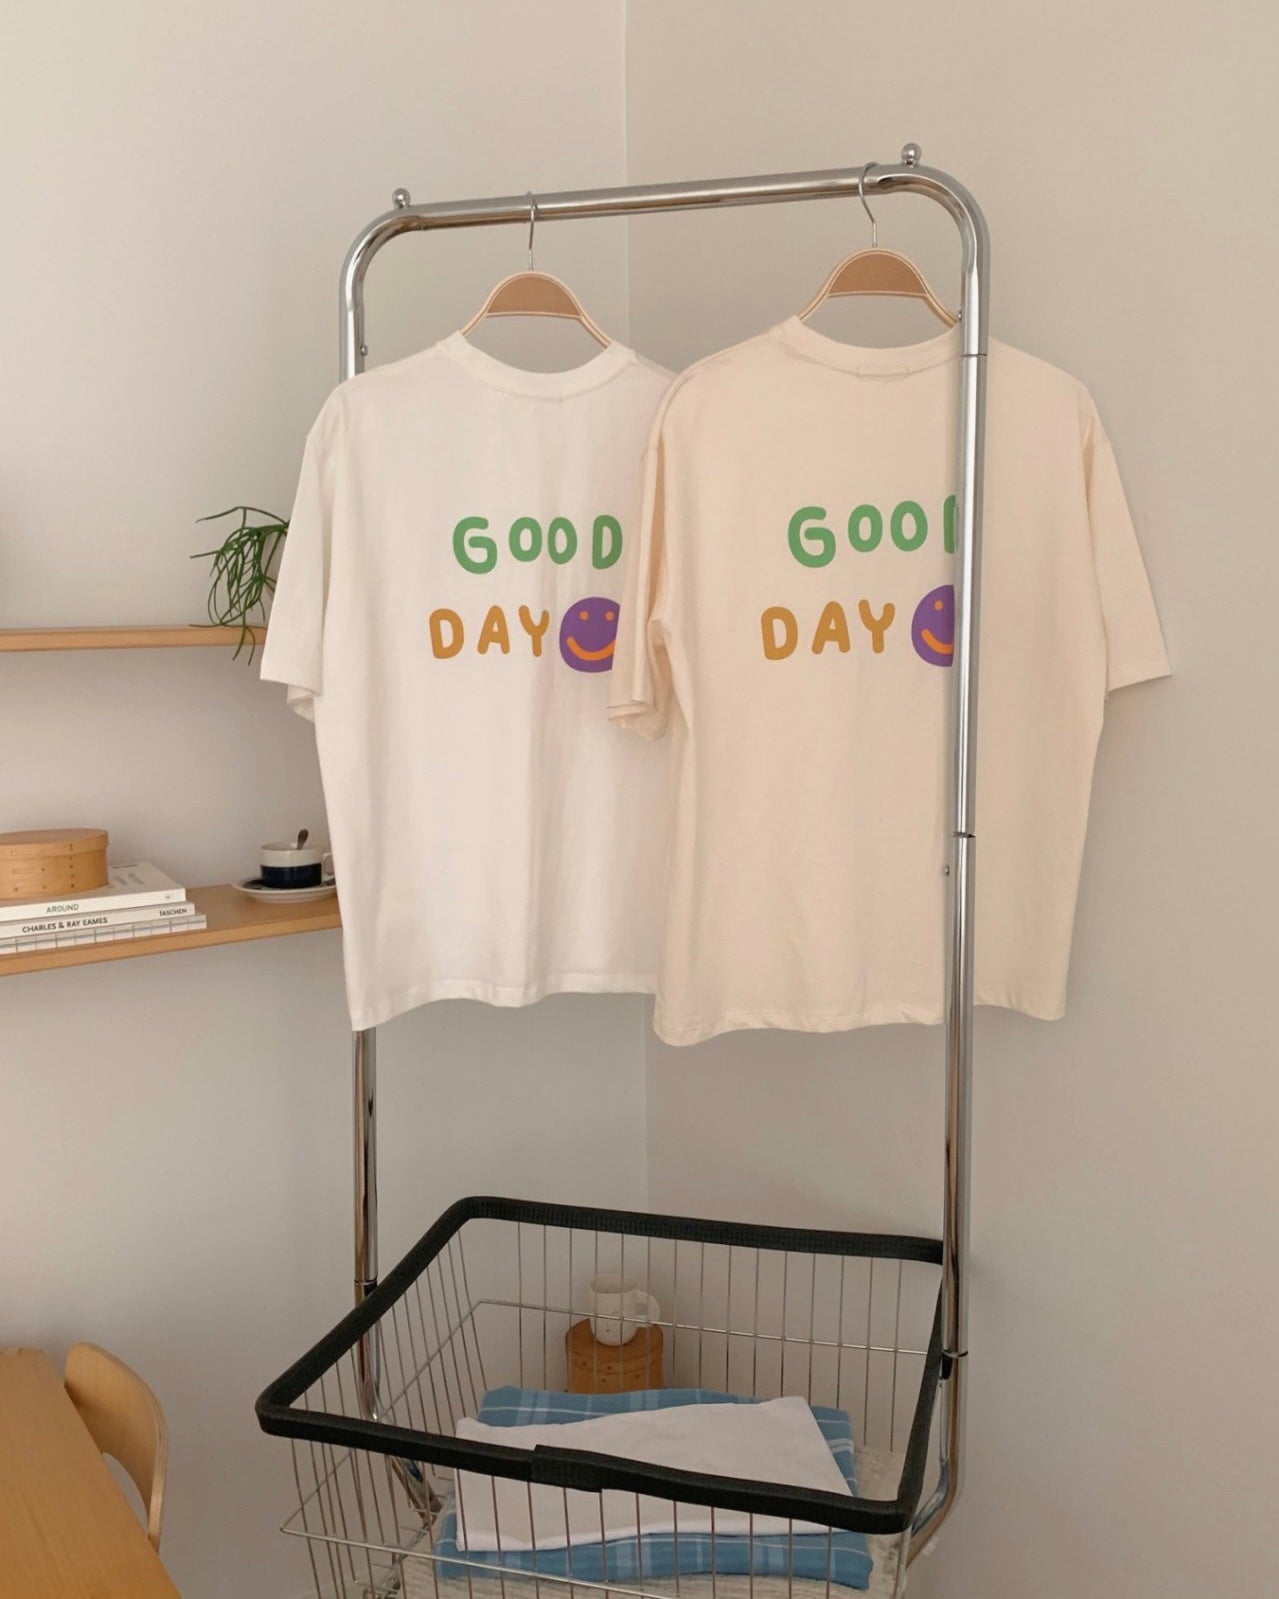 Good Day T Shirt